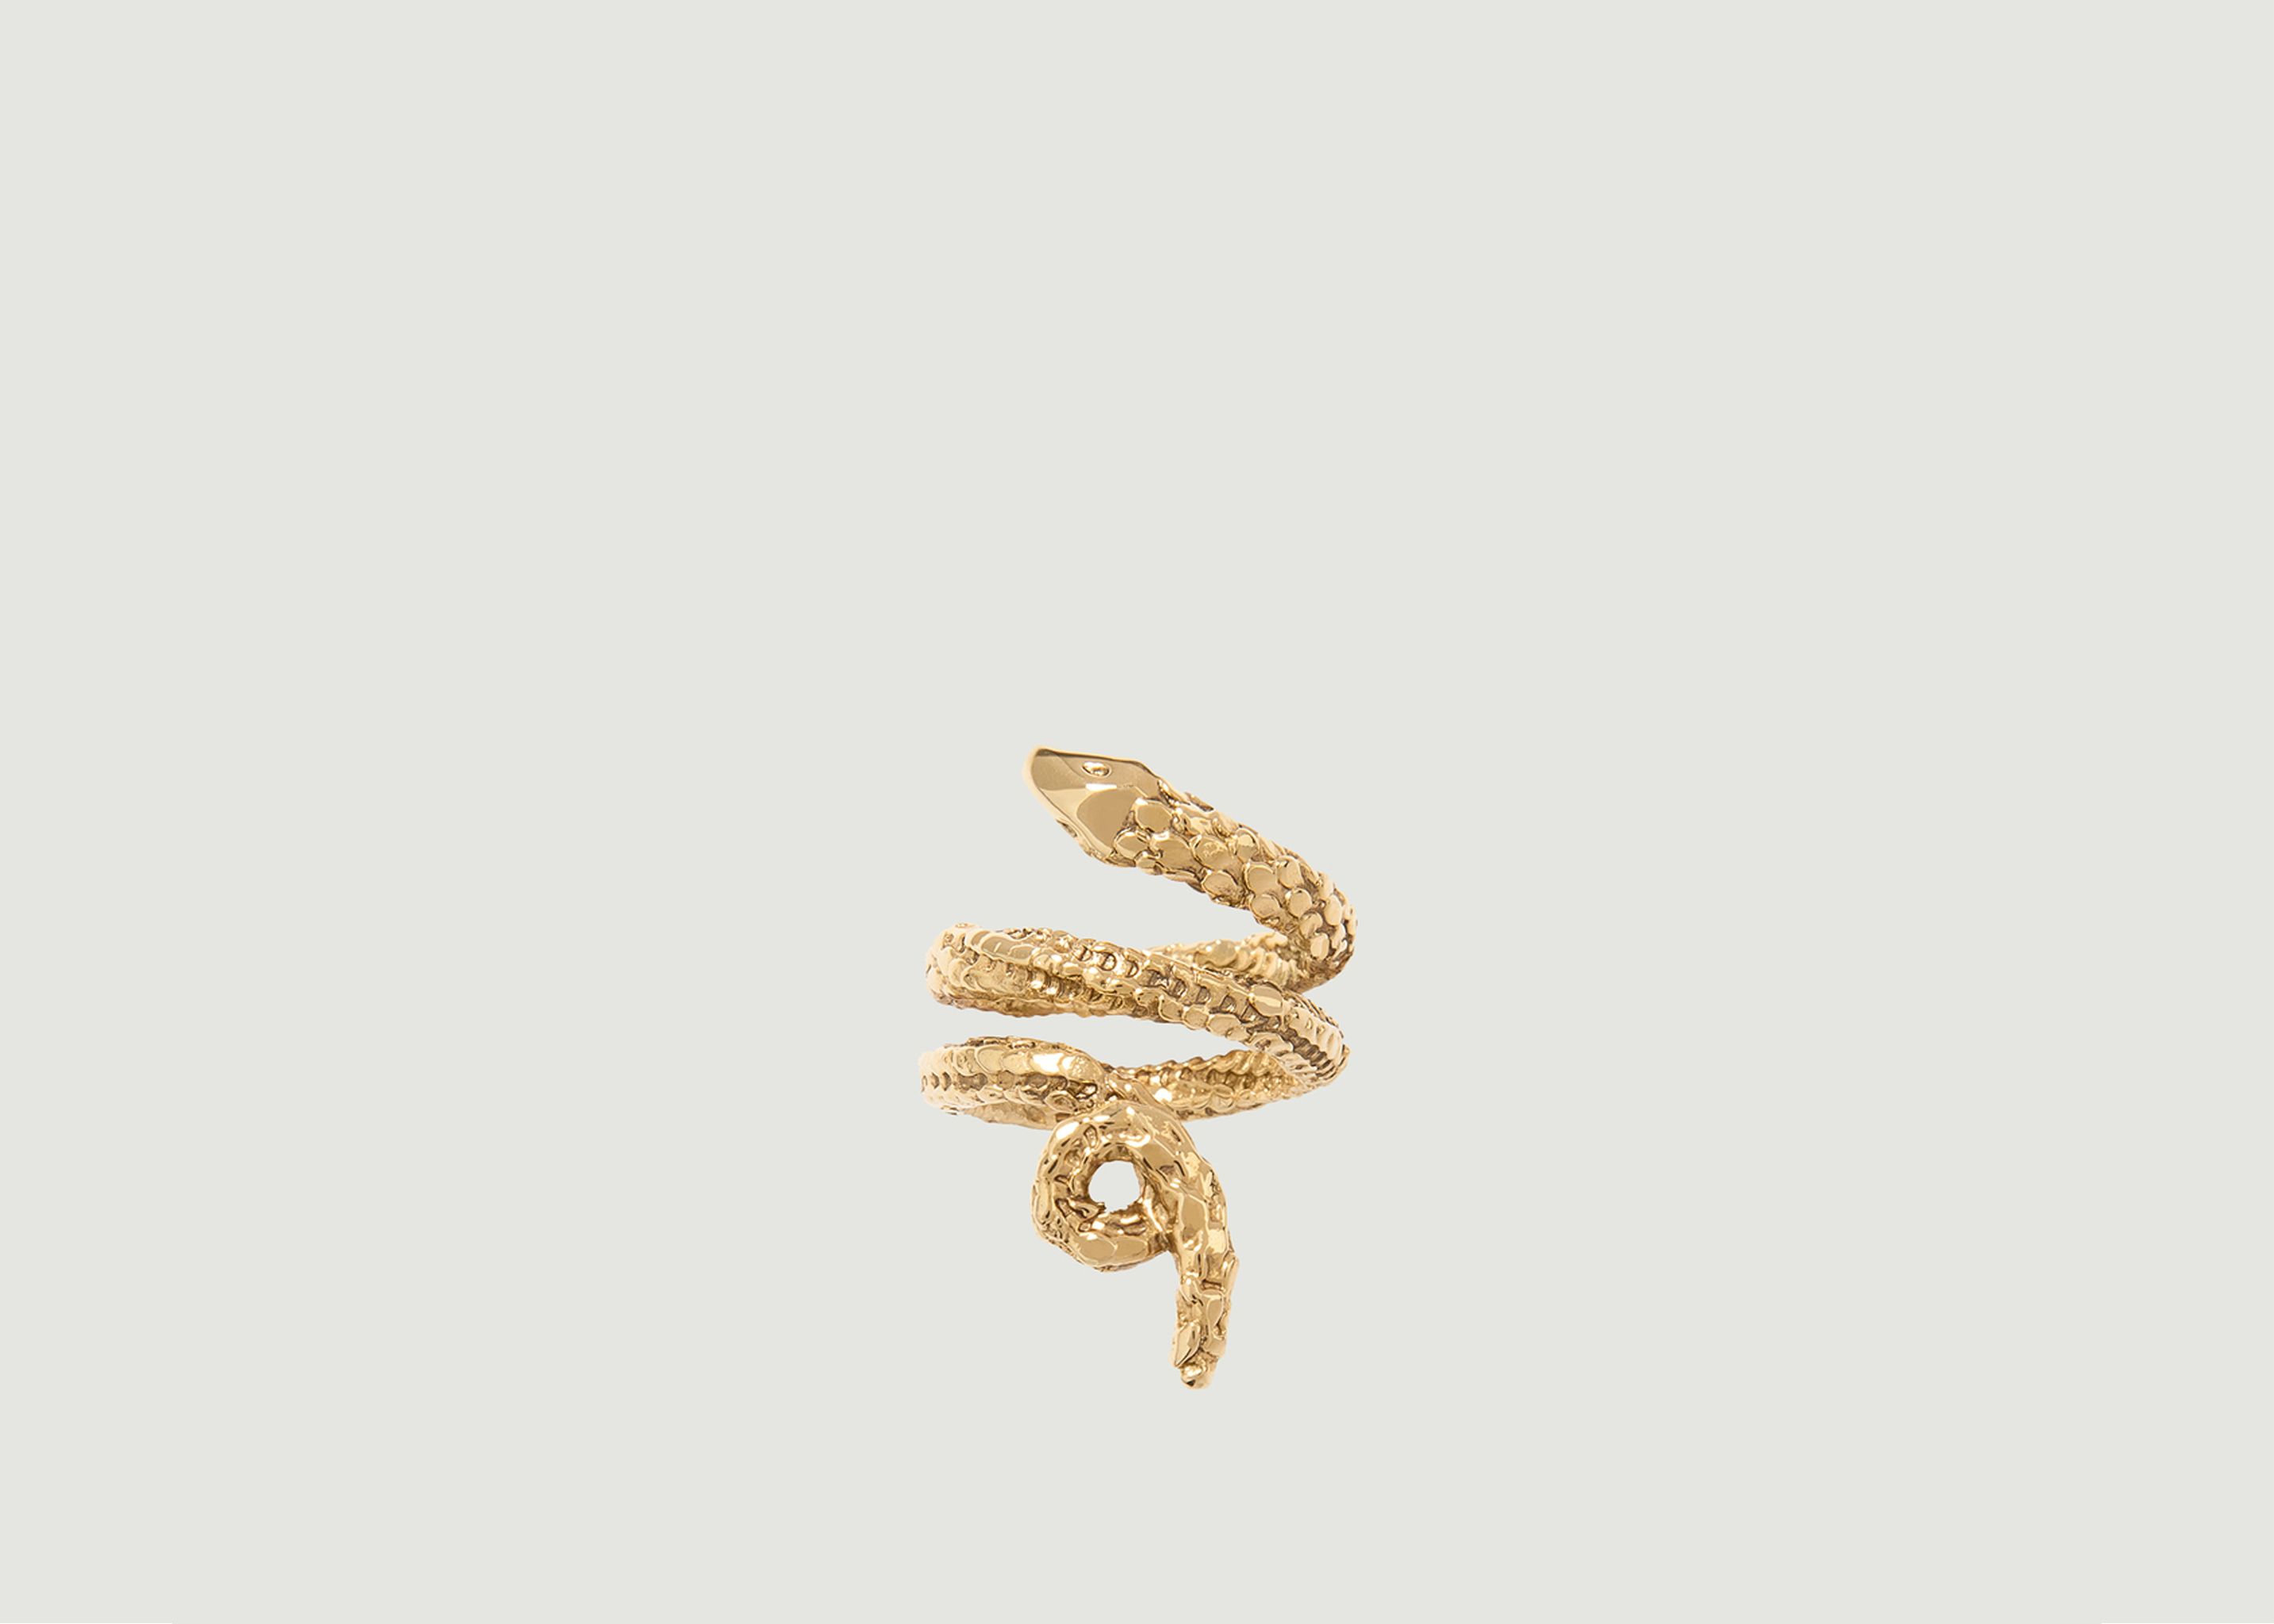 Tao gold plated snake ring - Aurélie Bidermann